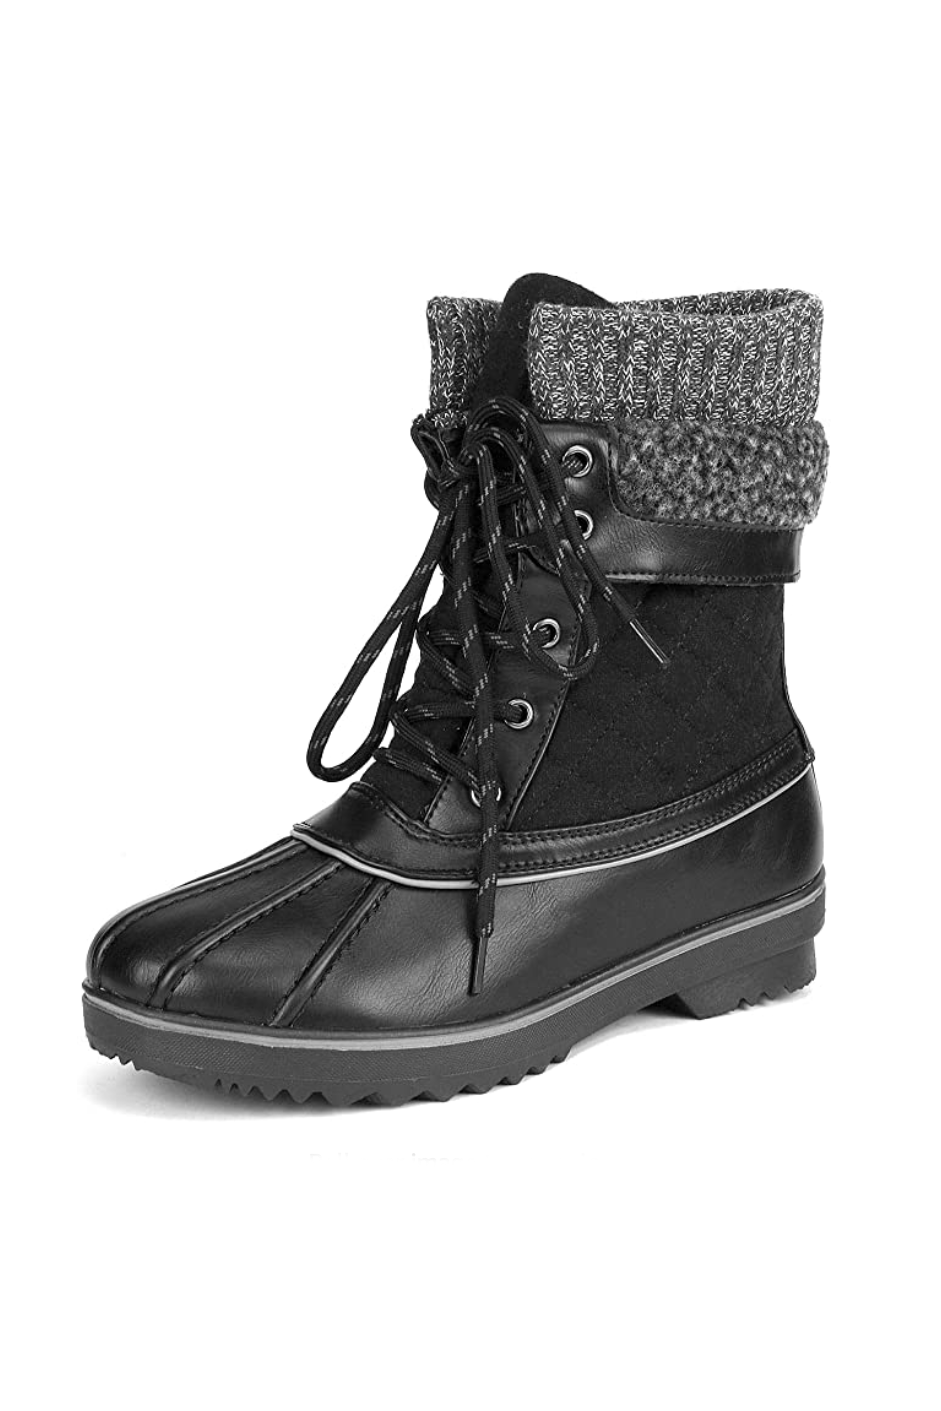 outdoor winter boots